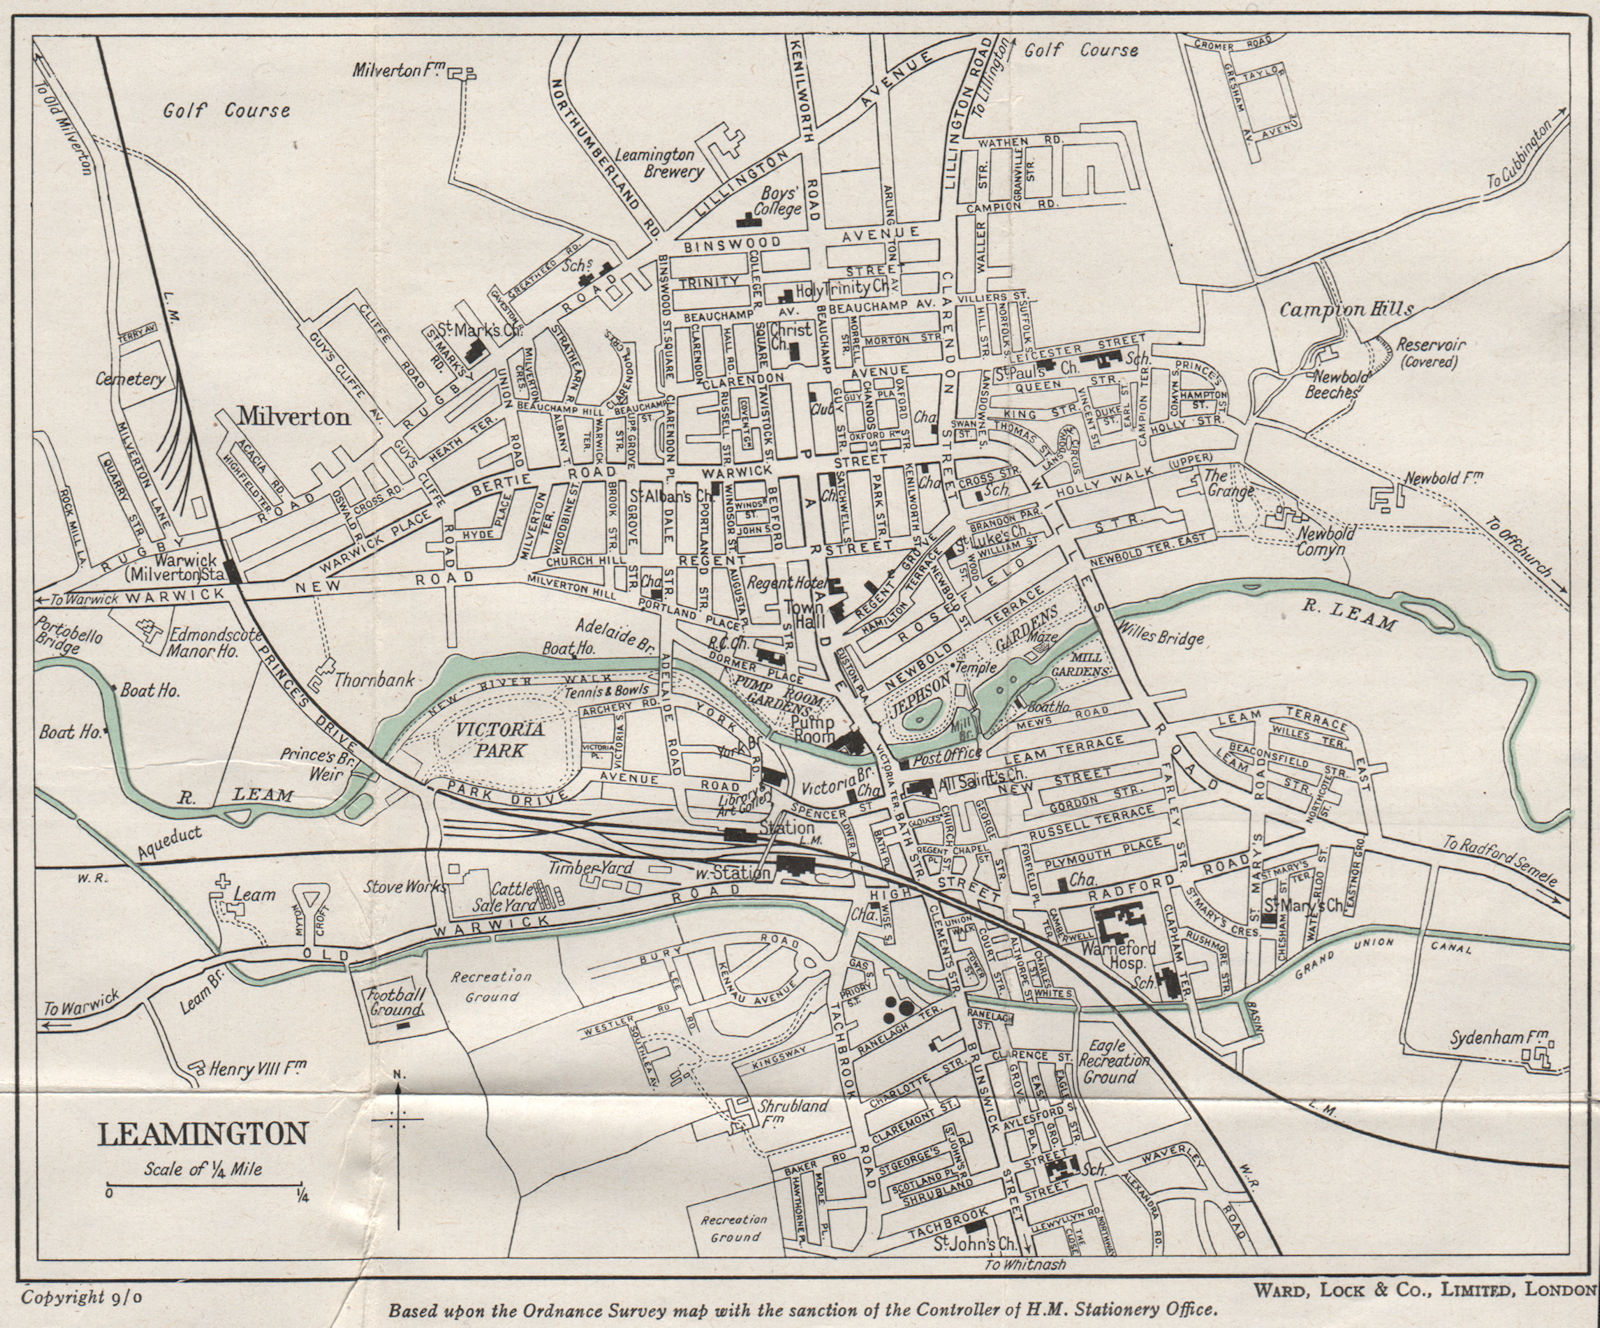 Associate Product LEAMINGTON vintage town/city plan. Warwickshire. WARD LOCK 1950 old map